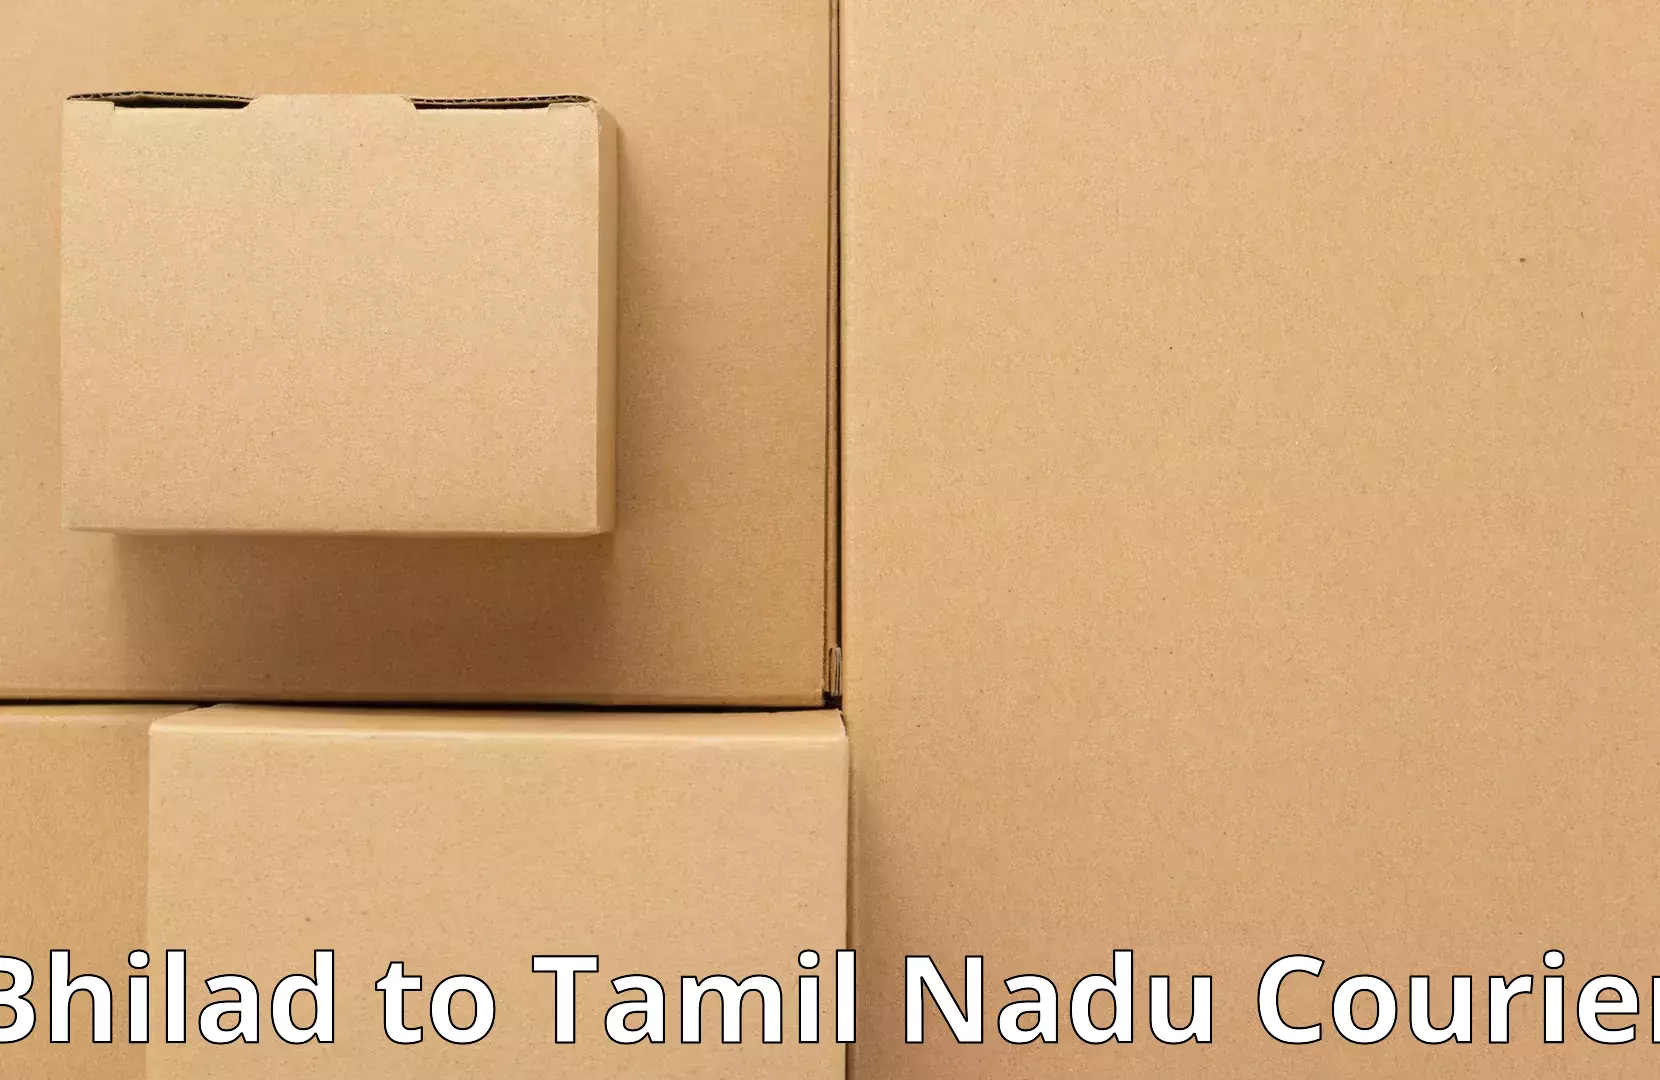 Seamless moving process Bhilad to Tamil Nadu